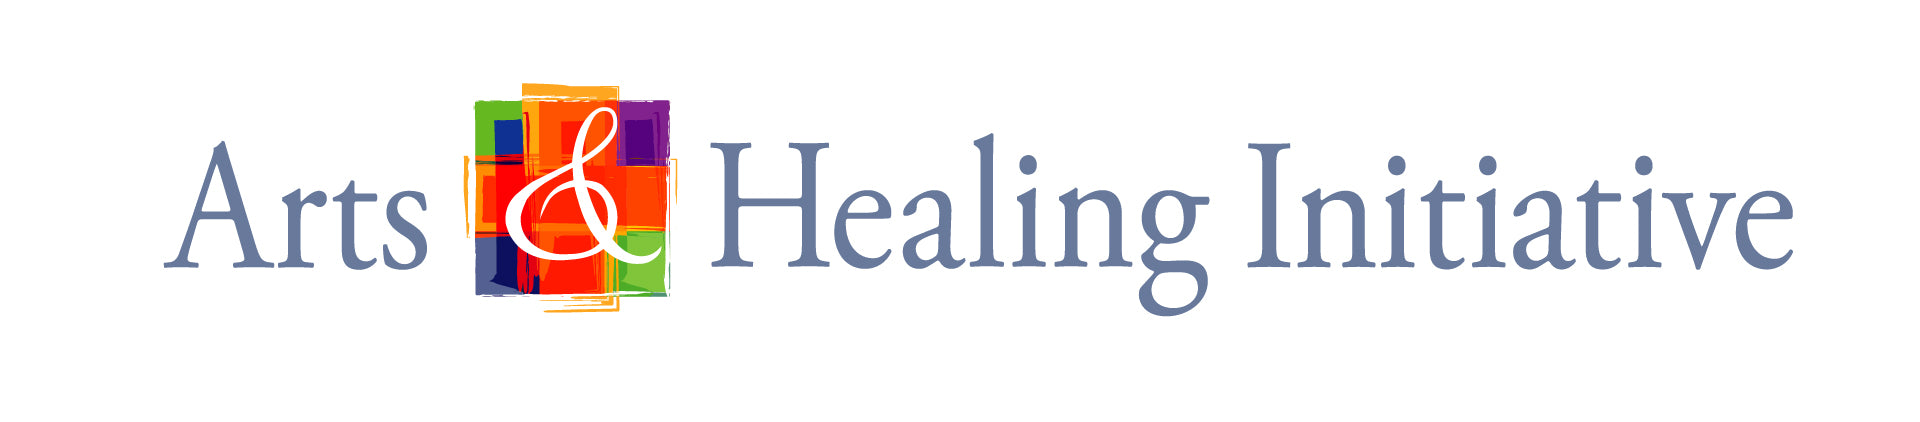 Arts & Healing Initiative